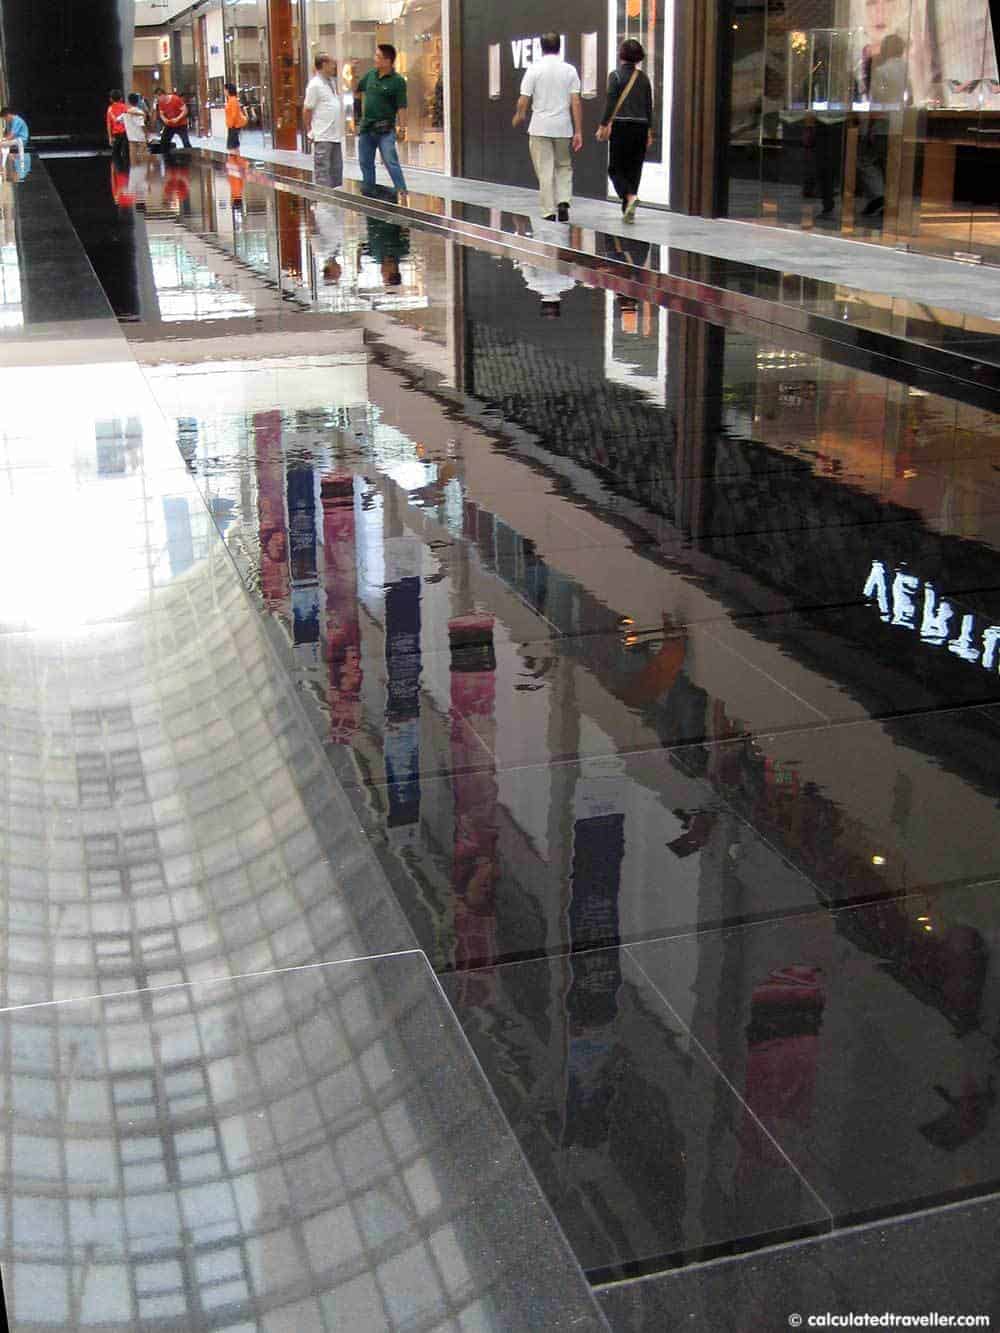 Marina Bay Sands Mall